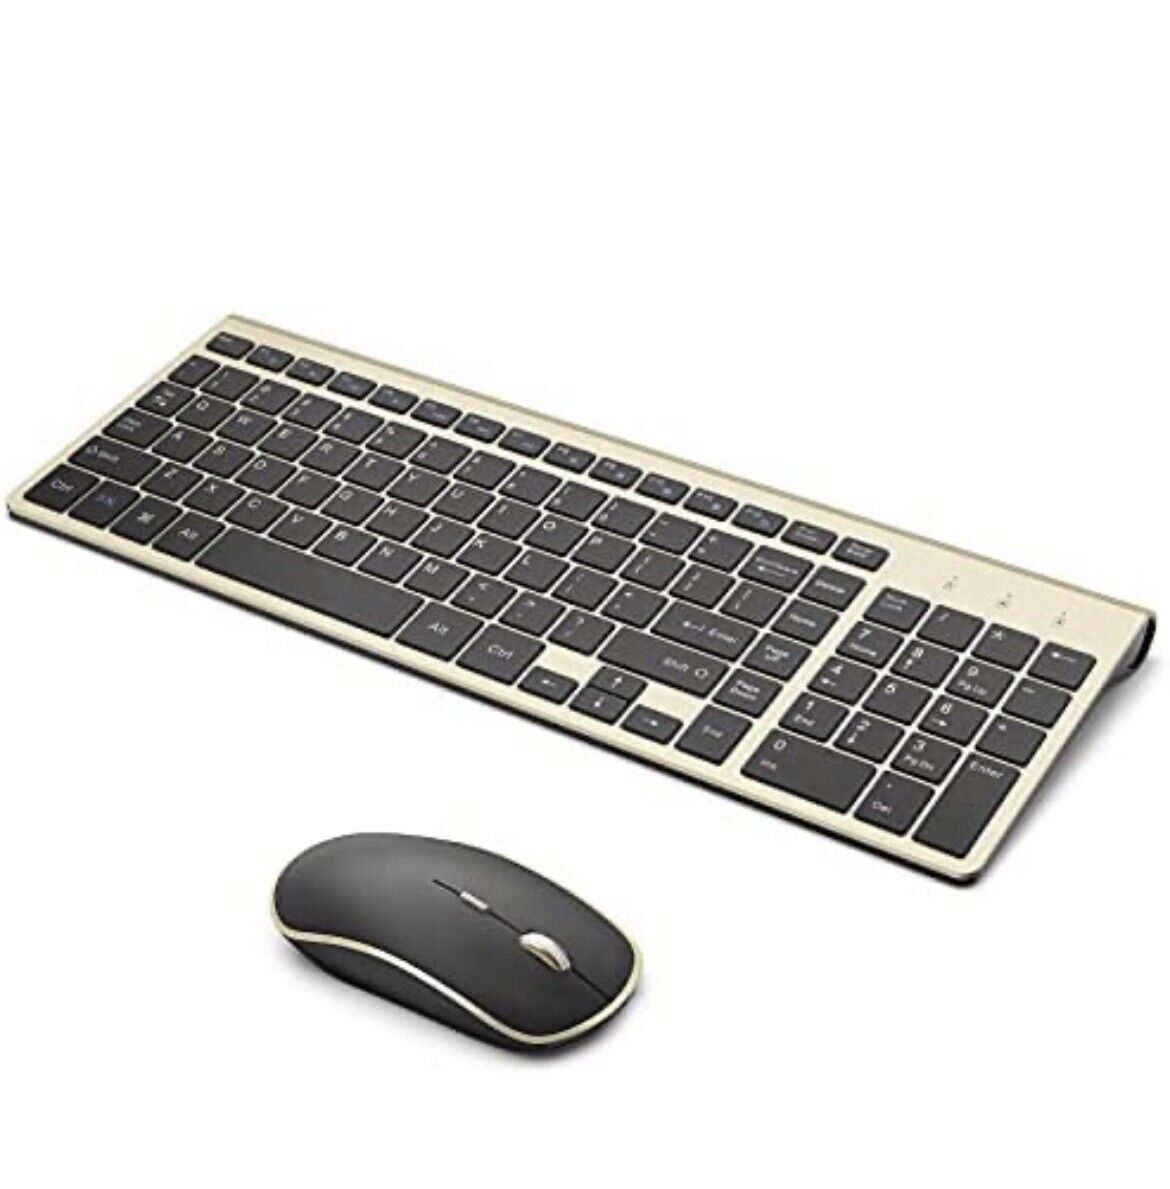 J JOYACCESS Wireless Keyboard Mouse 2.4G Slim & Compact Computer for Laptop PC